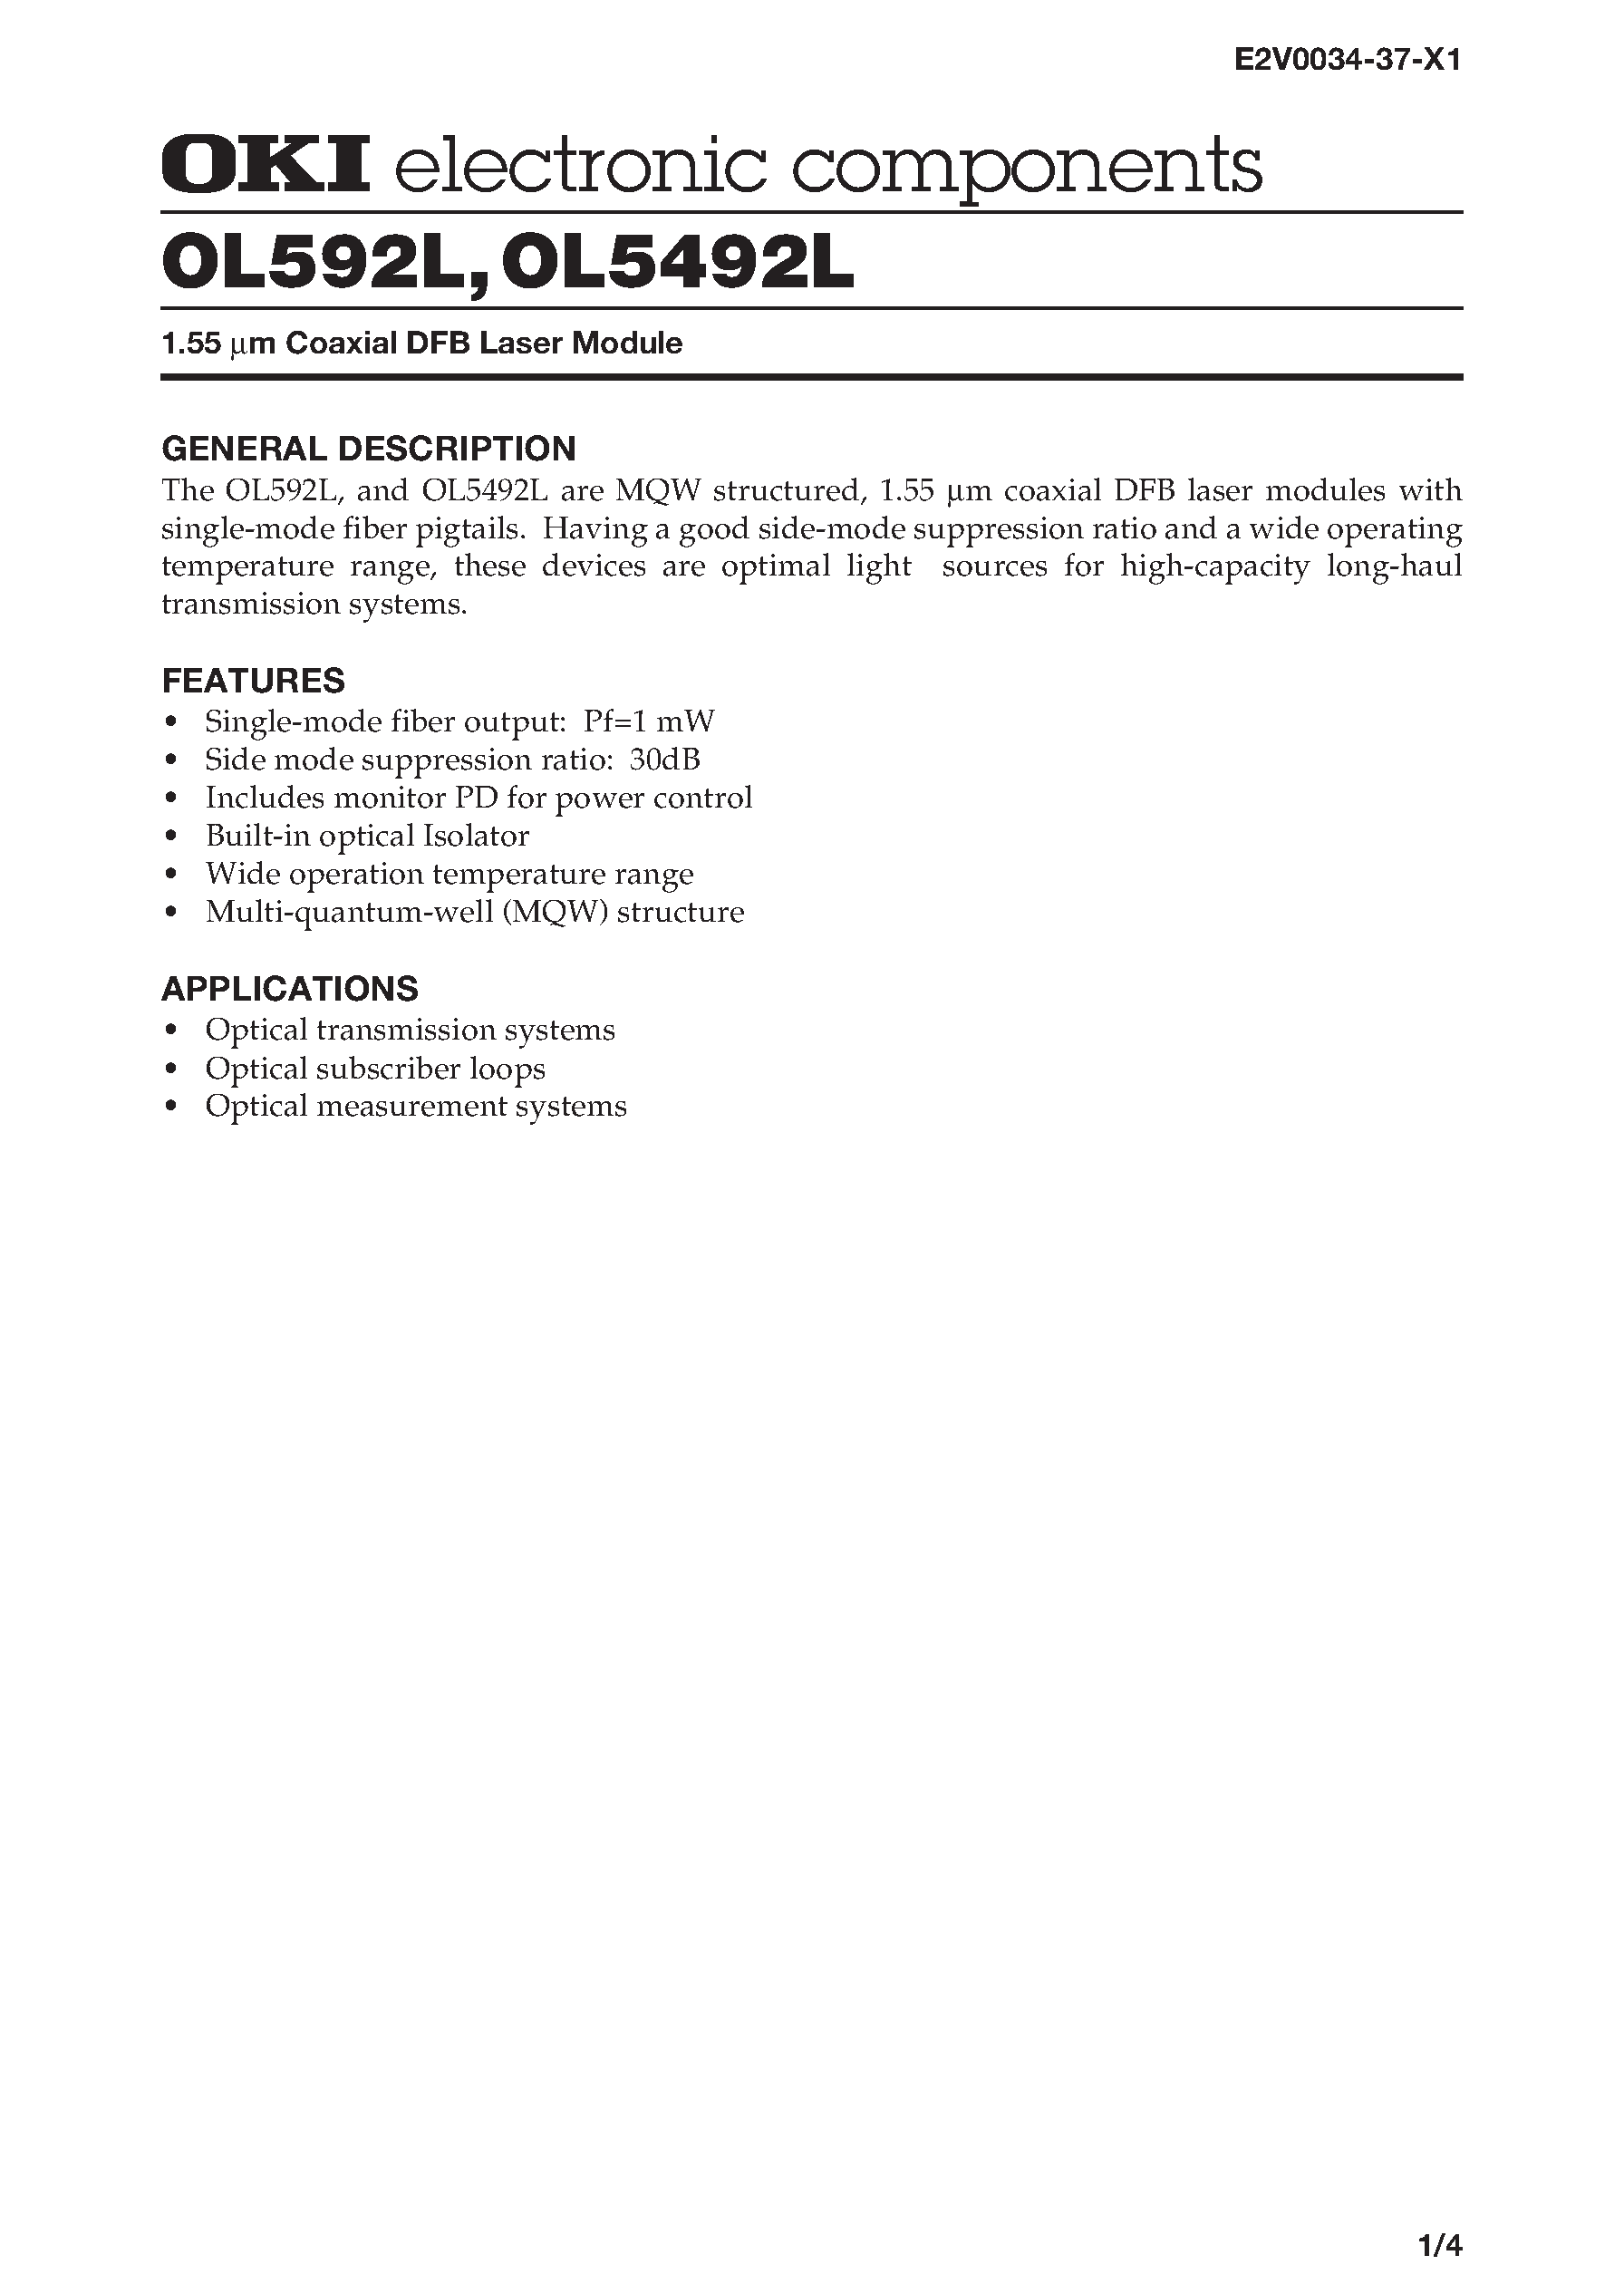 Datasheet OL592L - 1.55 m Coaxial DFB Laser Module page 1